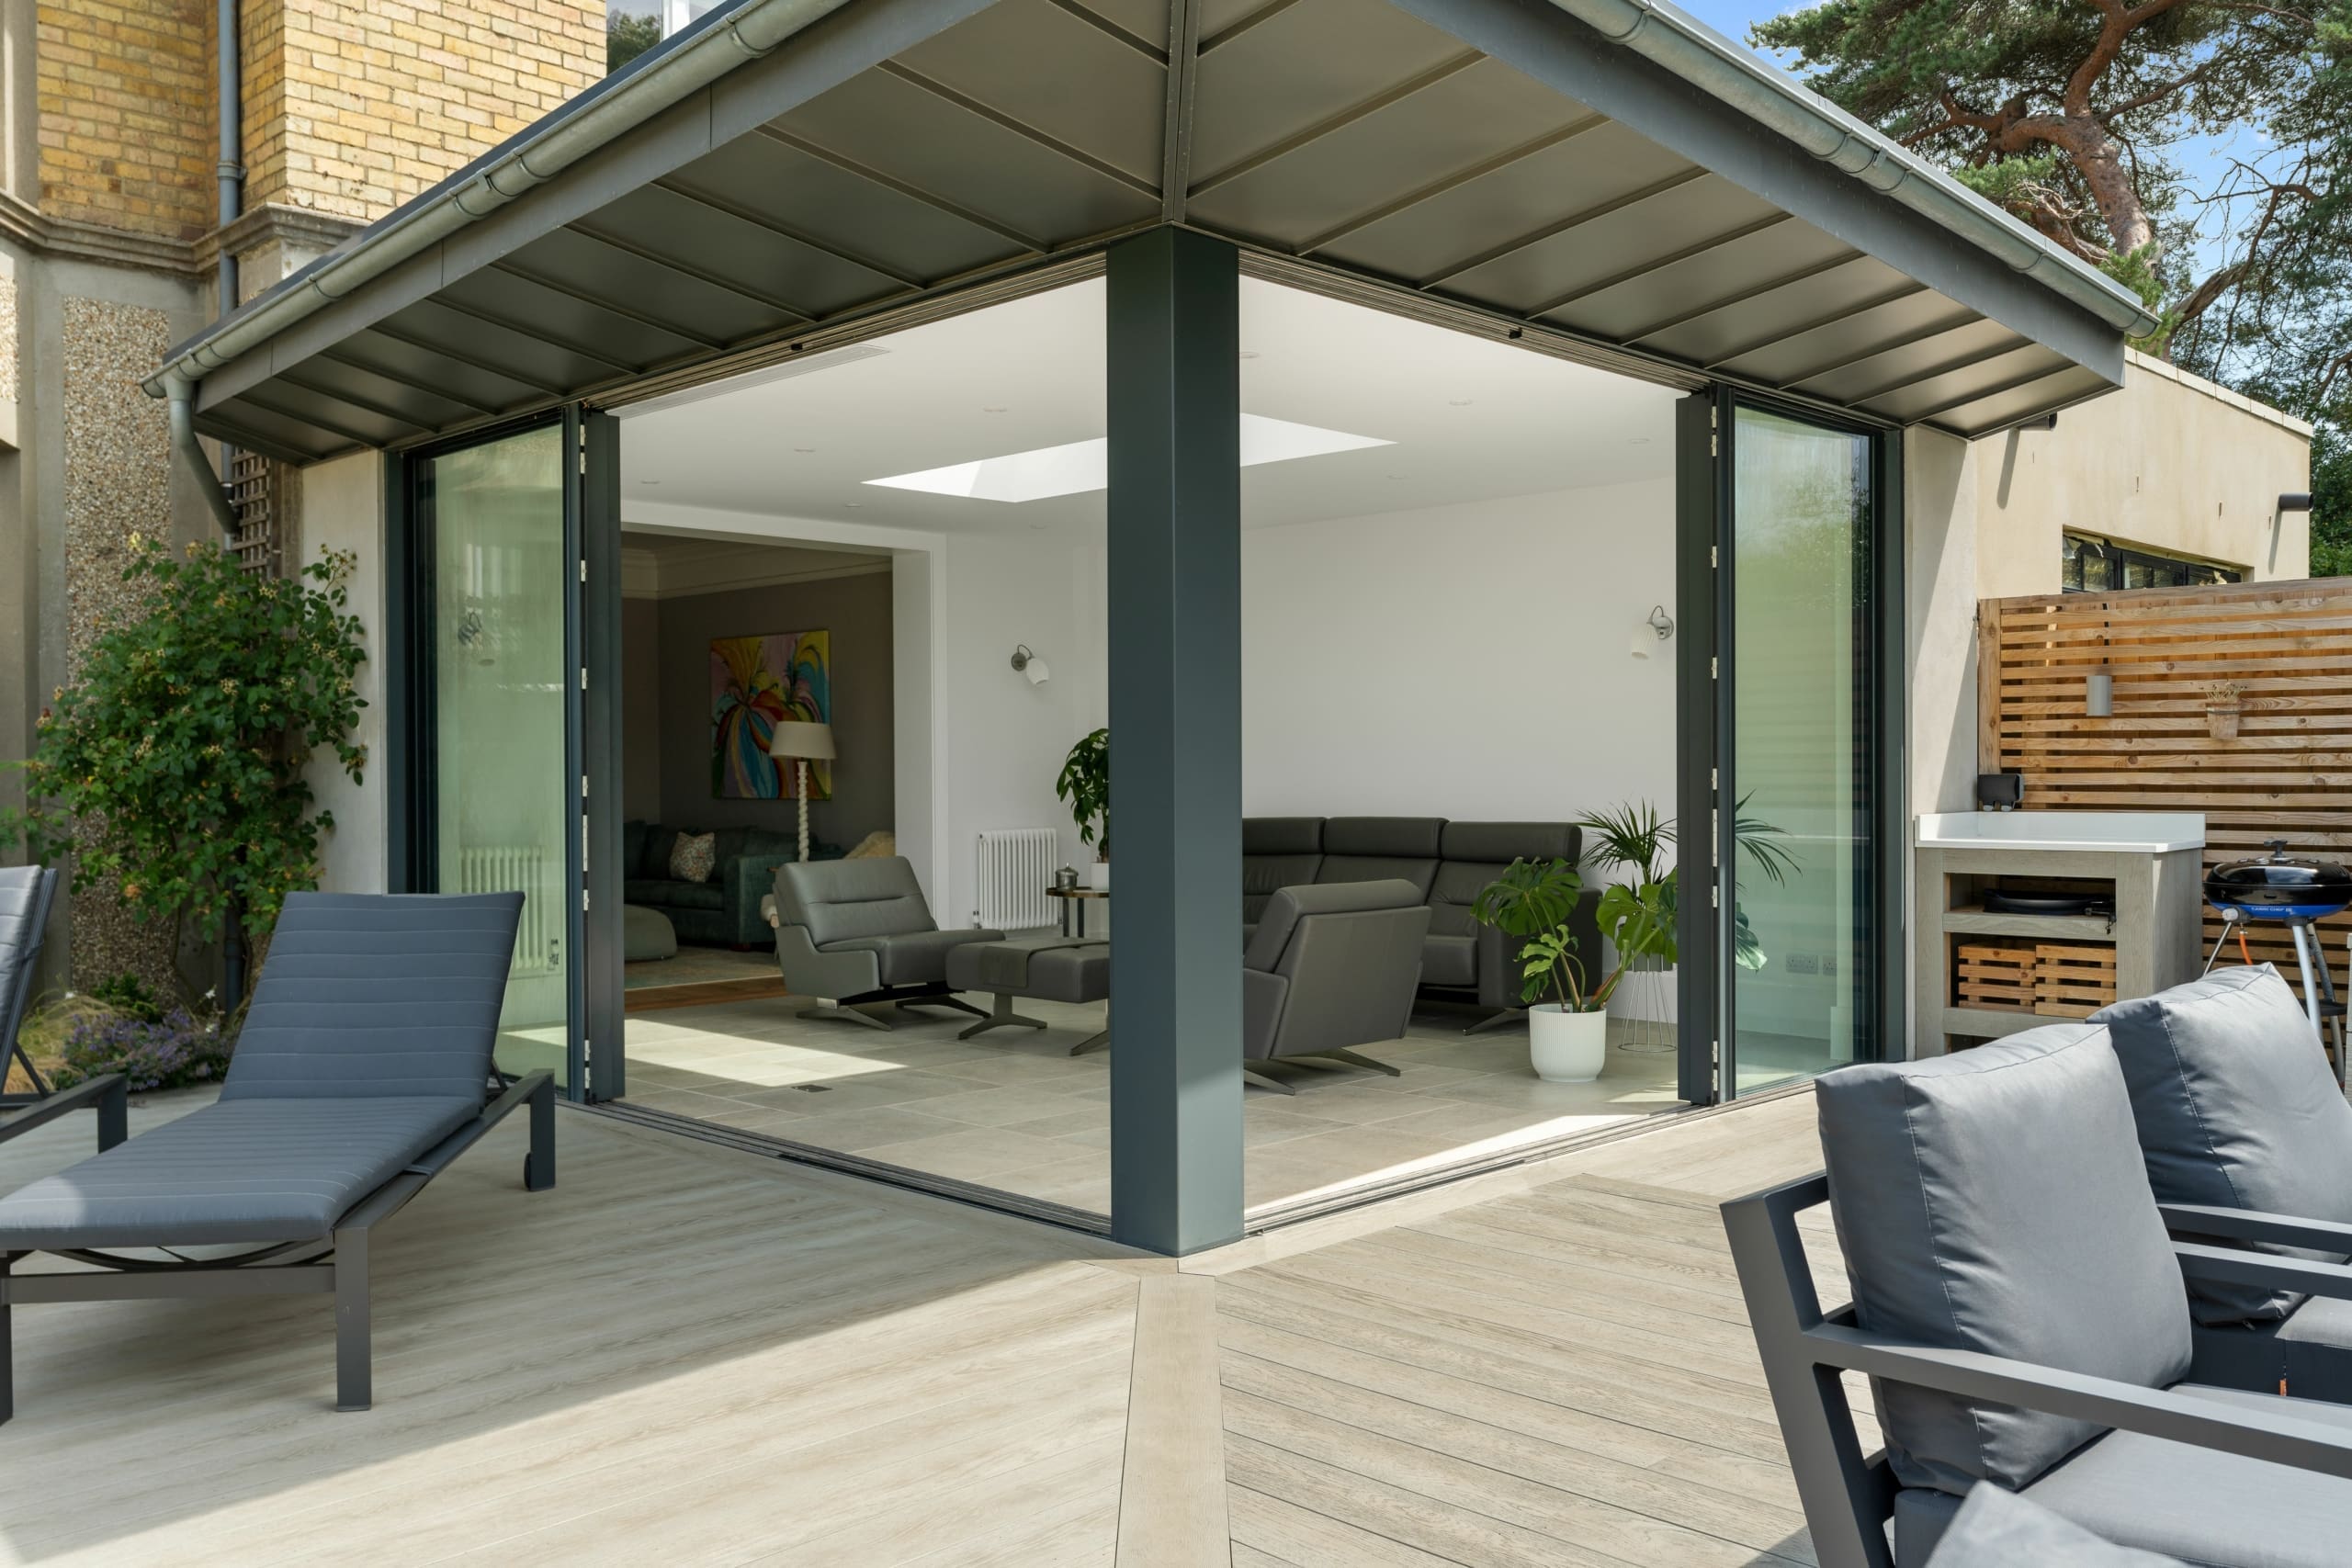 Beautiful sliding external aluminium doors leading to a garden with sun loungers on the decking.